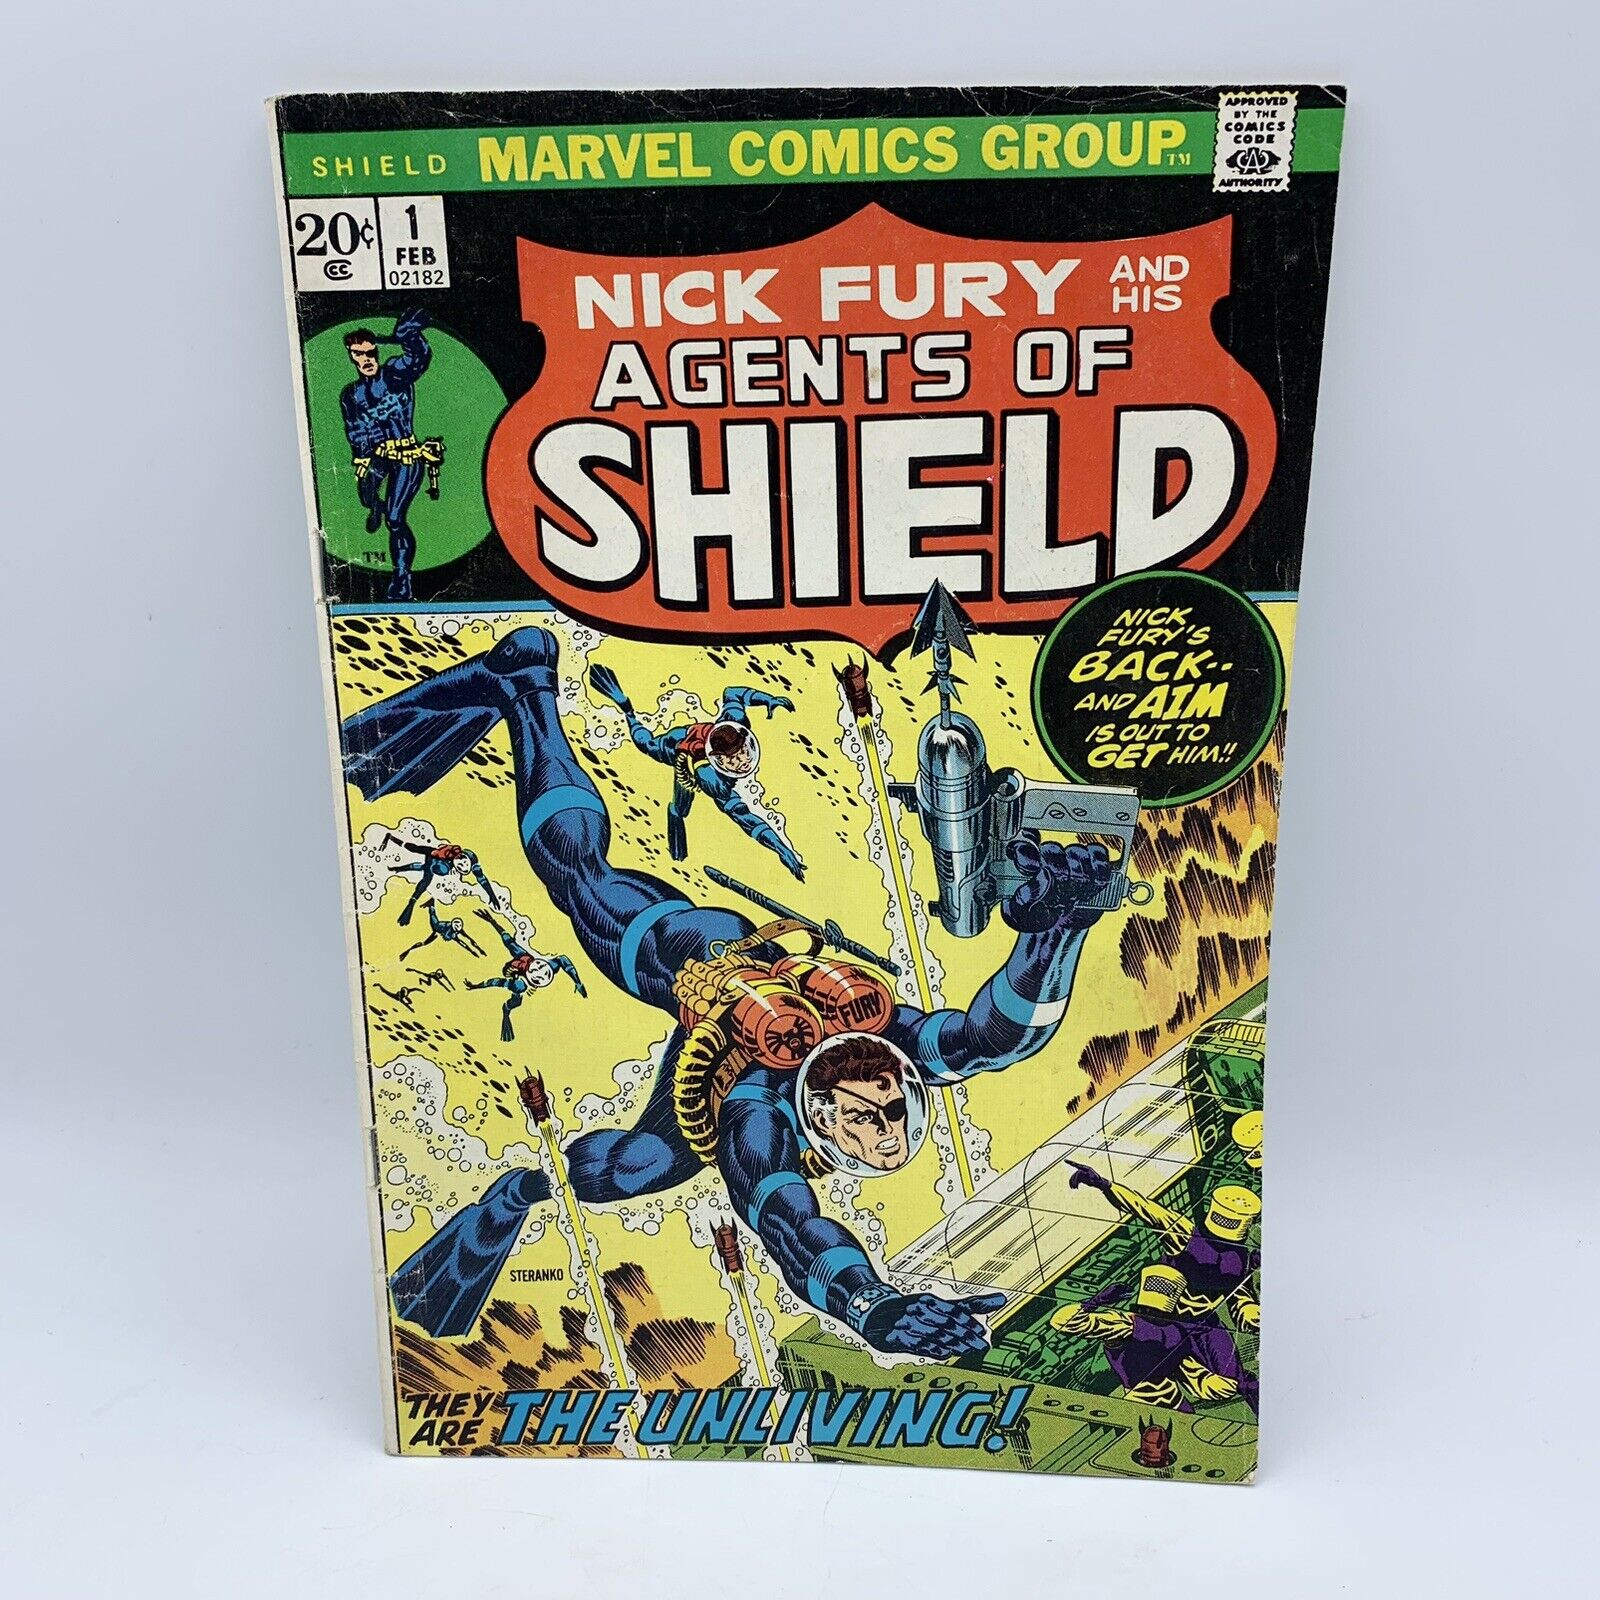 SHIELD - NICK FURY and his AGENTS OF SHIELD #1 (FEB 1973) 02182 Marvel Comics